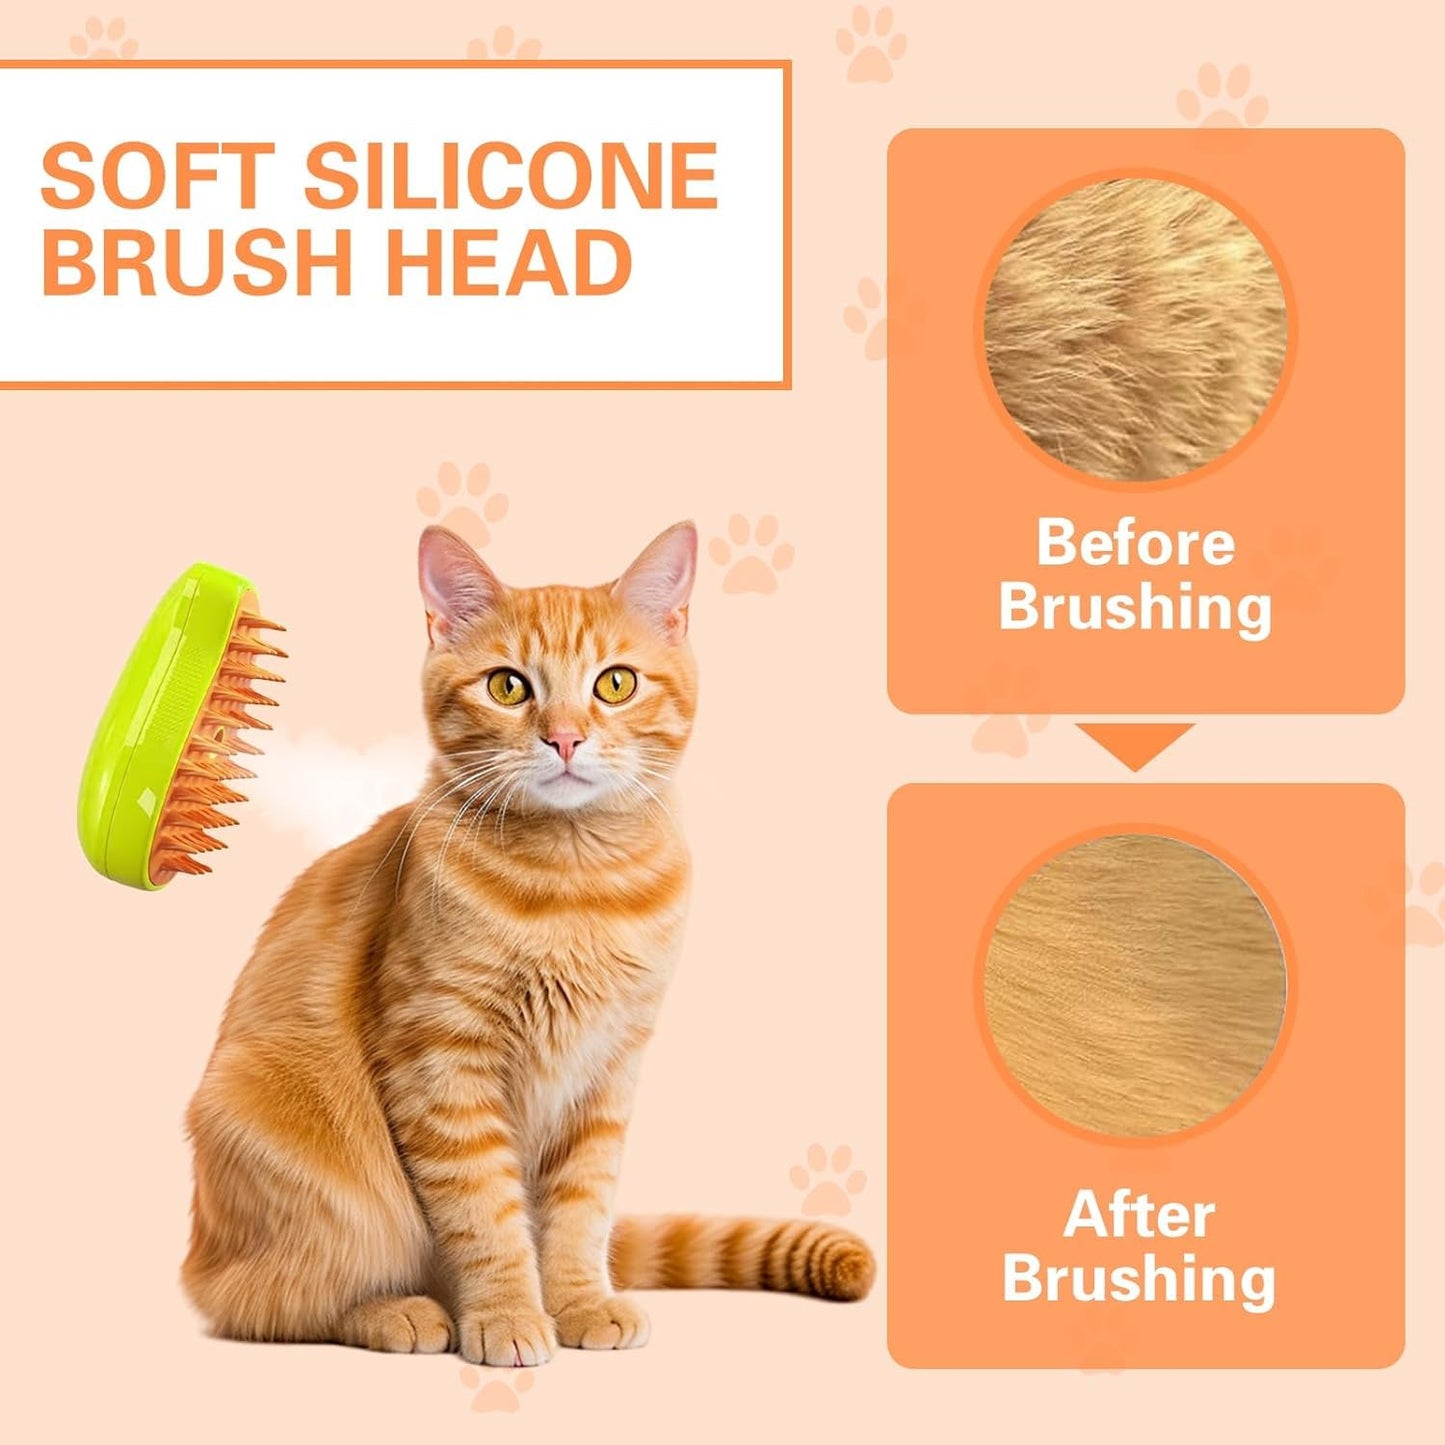 Steamy 3 in 1 Pet Hair Brush